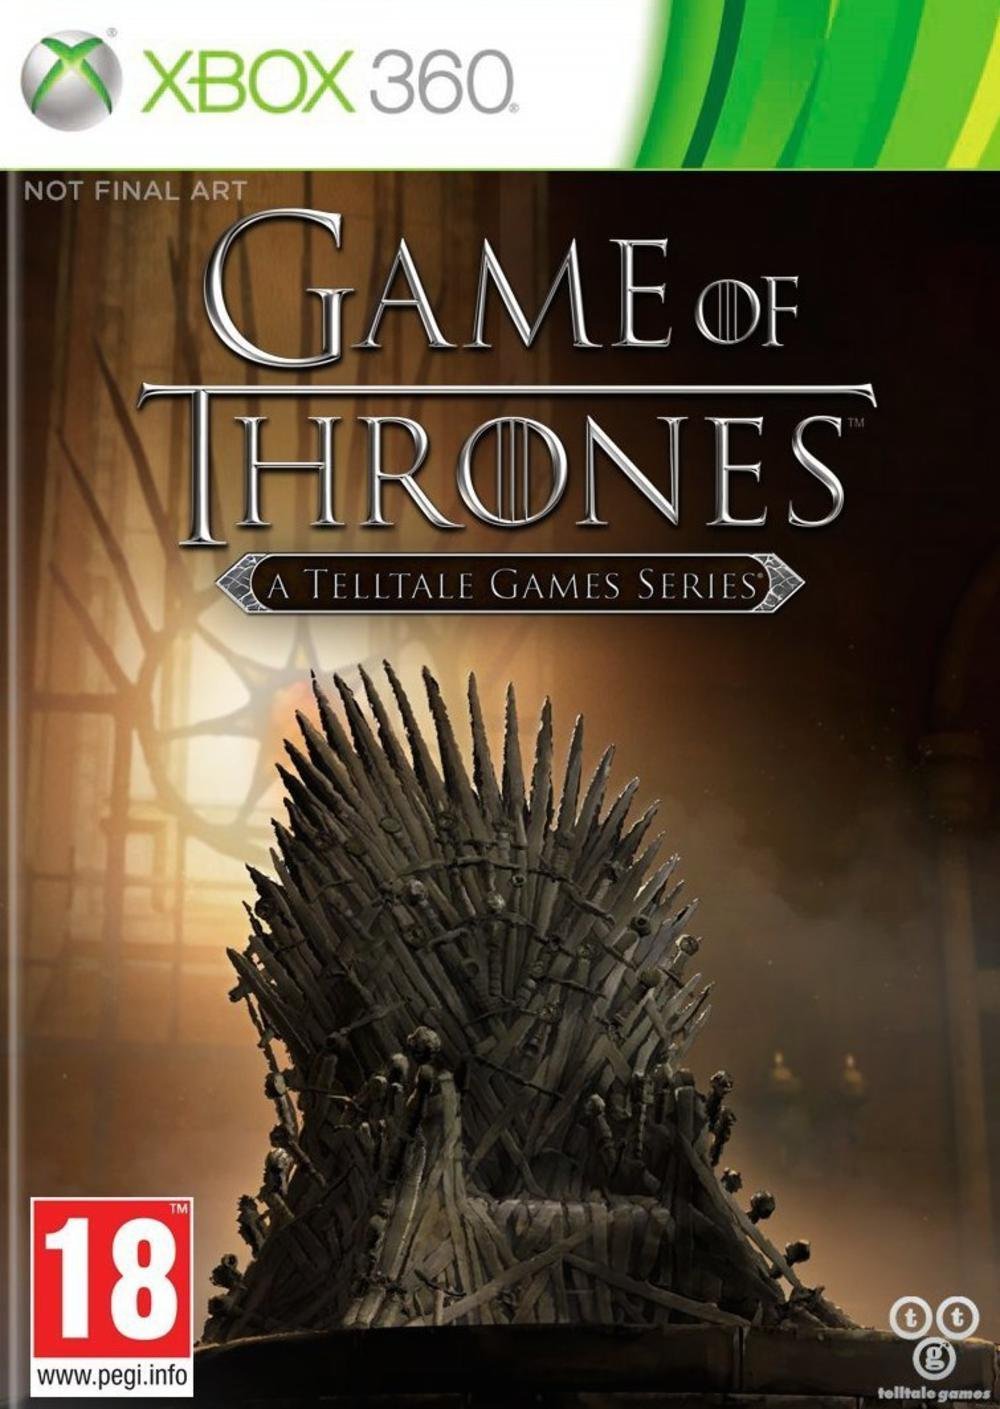 Game of Thrones: A Telltale Games Series - Season One (Xbox360), Telltale Games